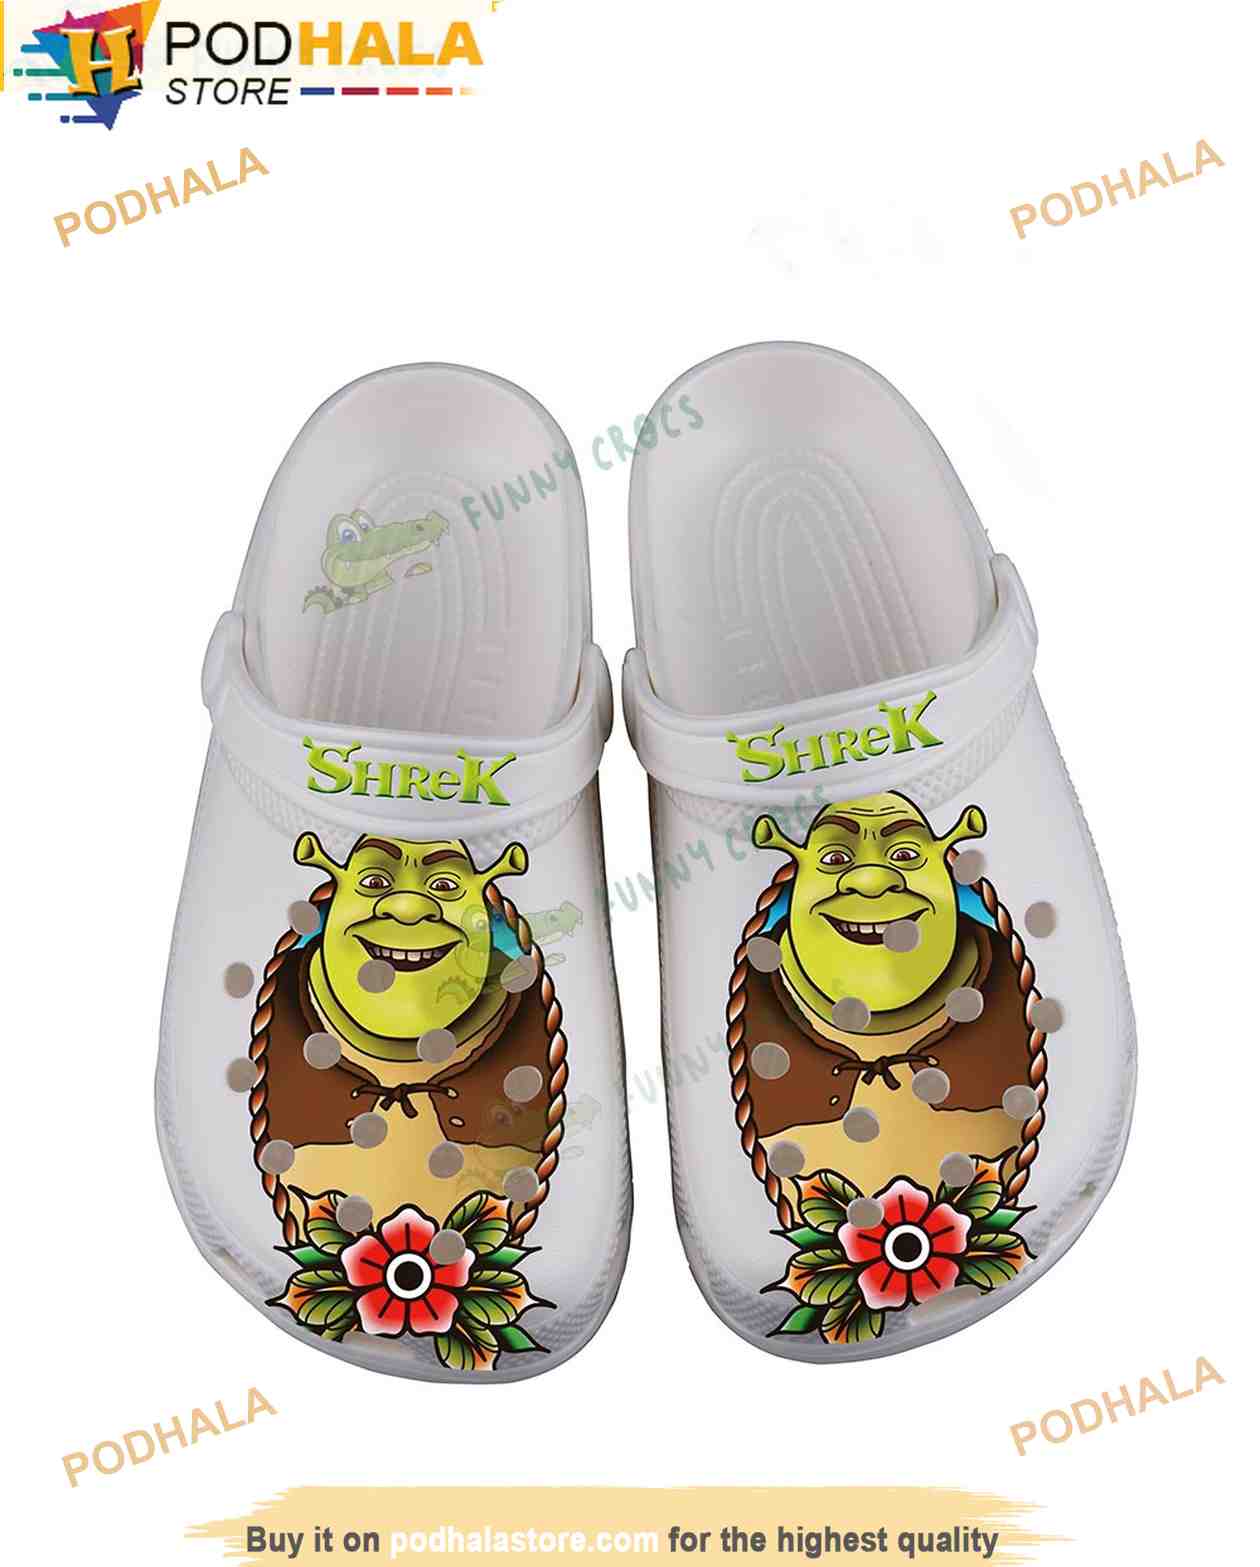 Crocs Introduce Shrek-themed Shoes! - LAFM